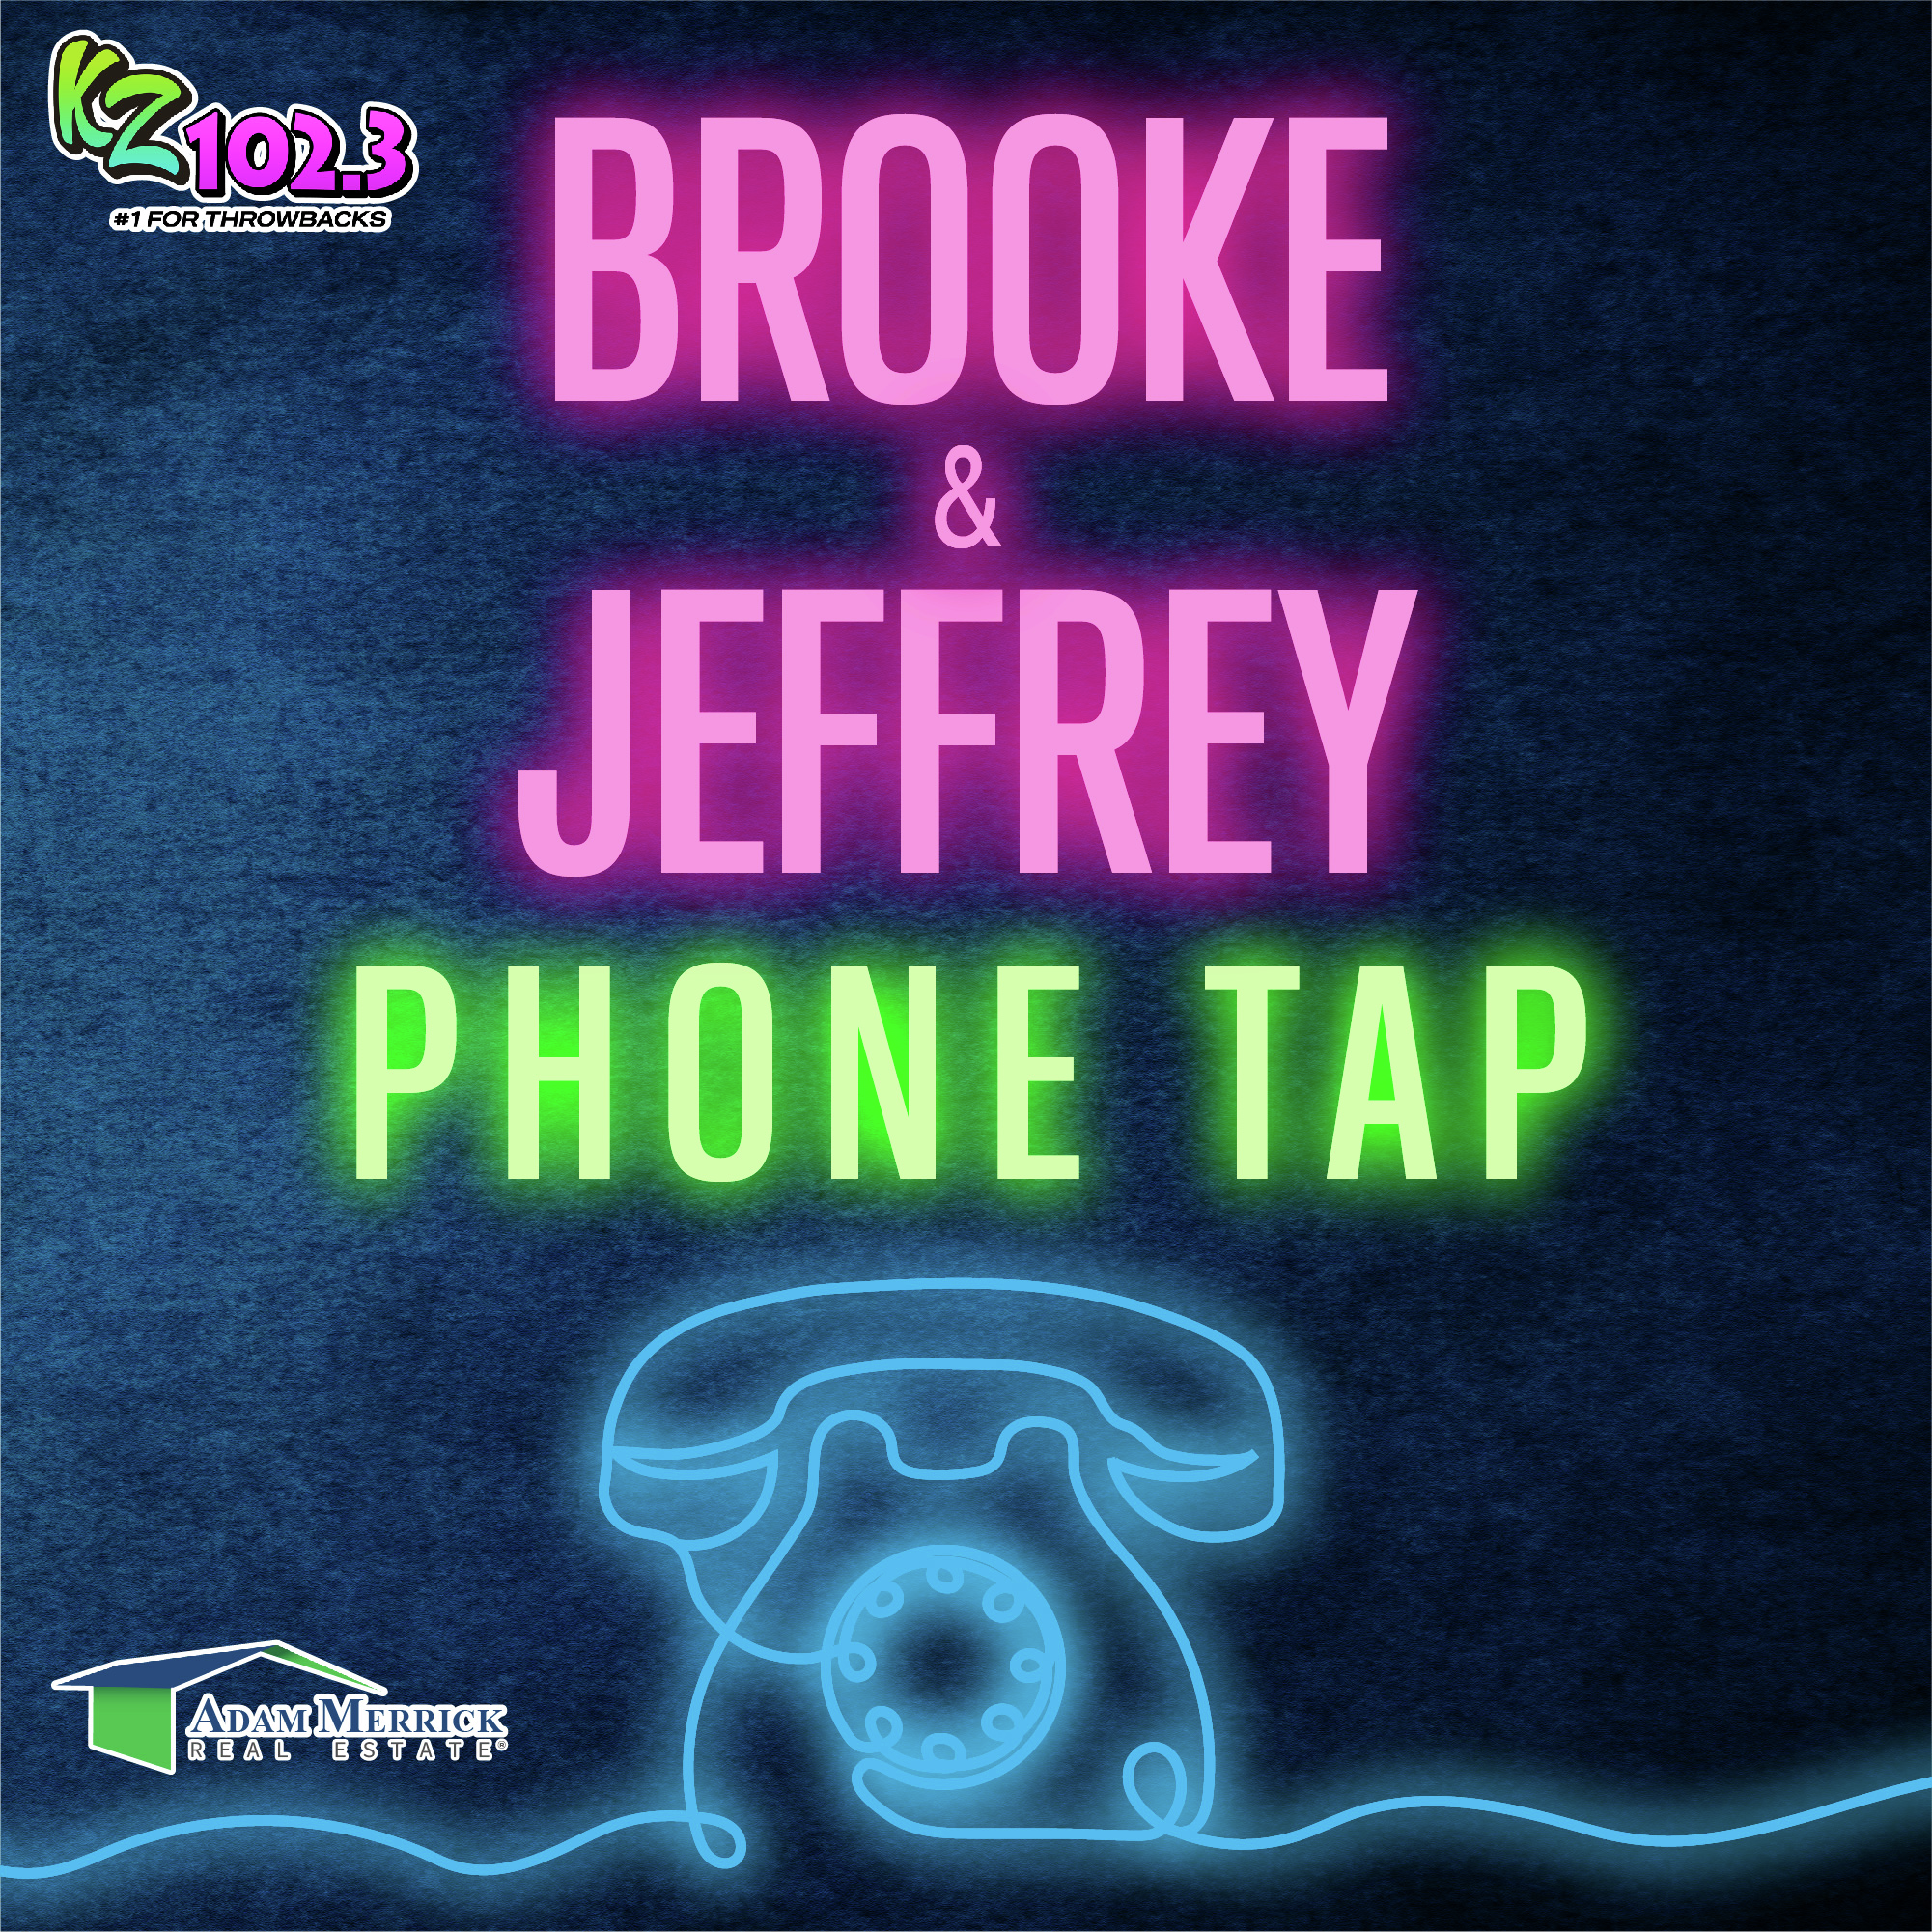 Phone Tap - Brooke (Costco Court)